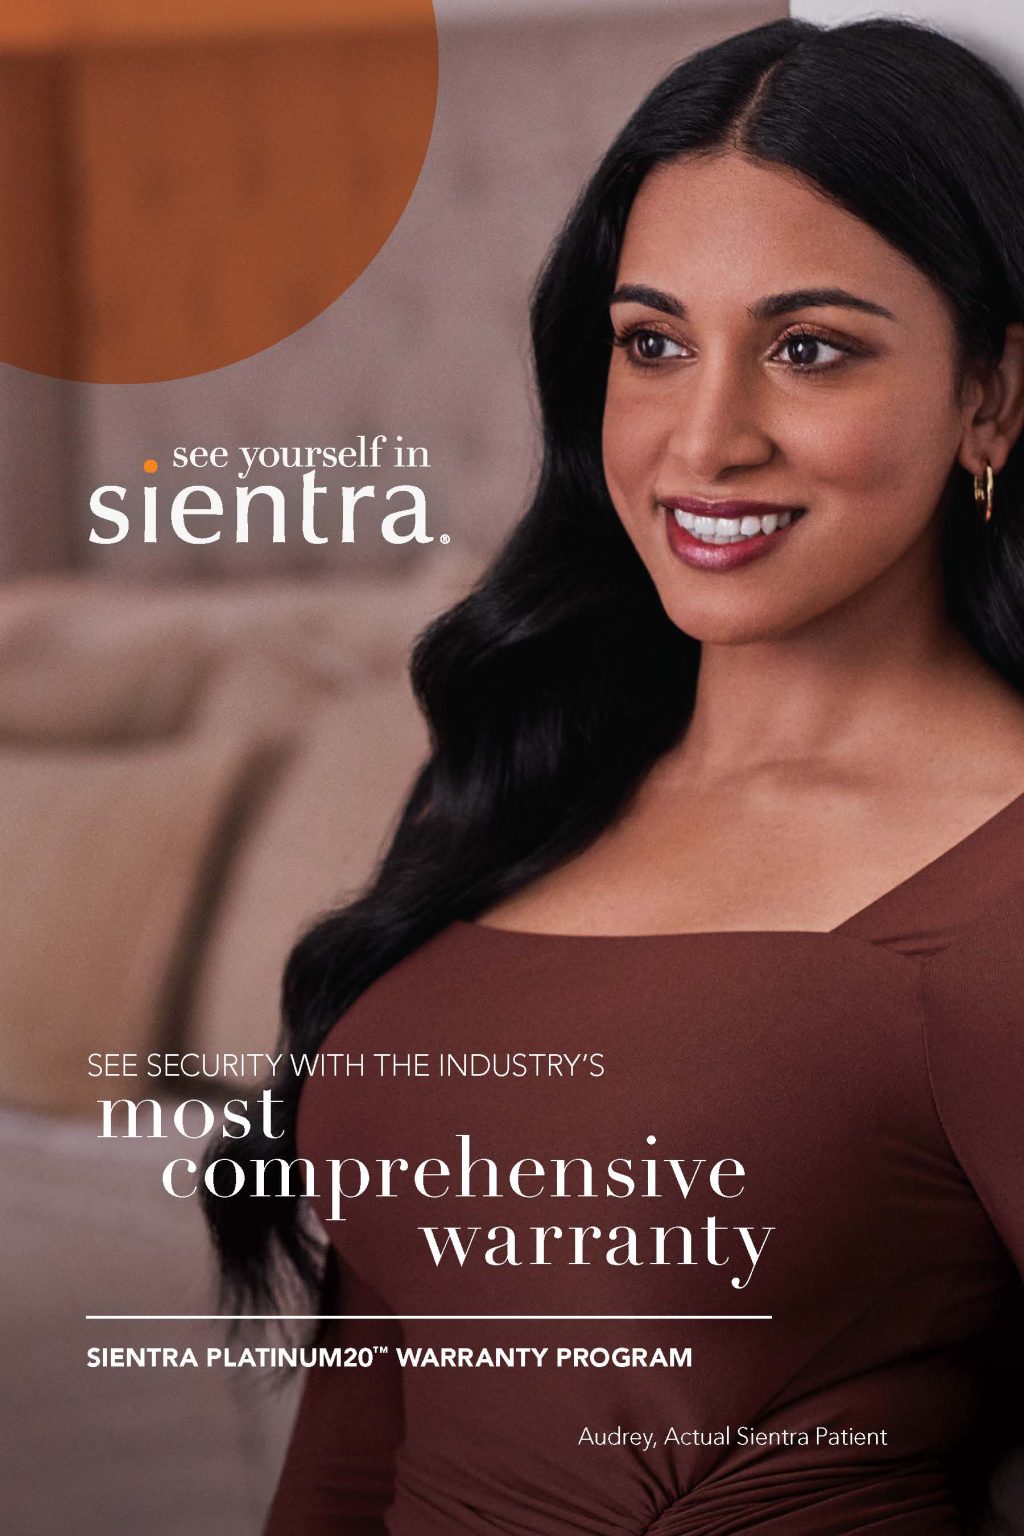 Sientra Platinum20 Warranty Program brochure